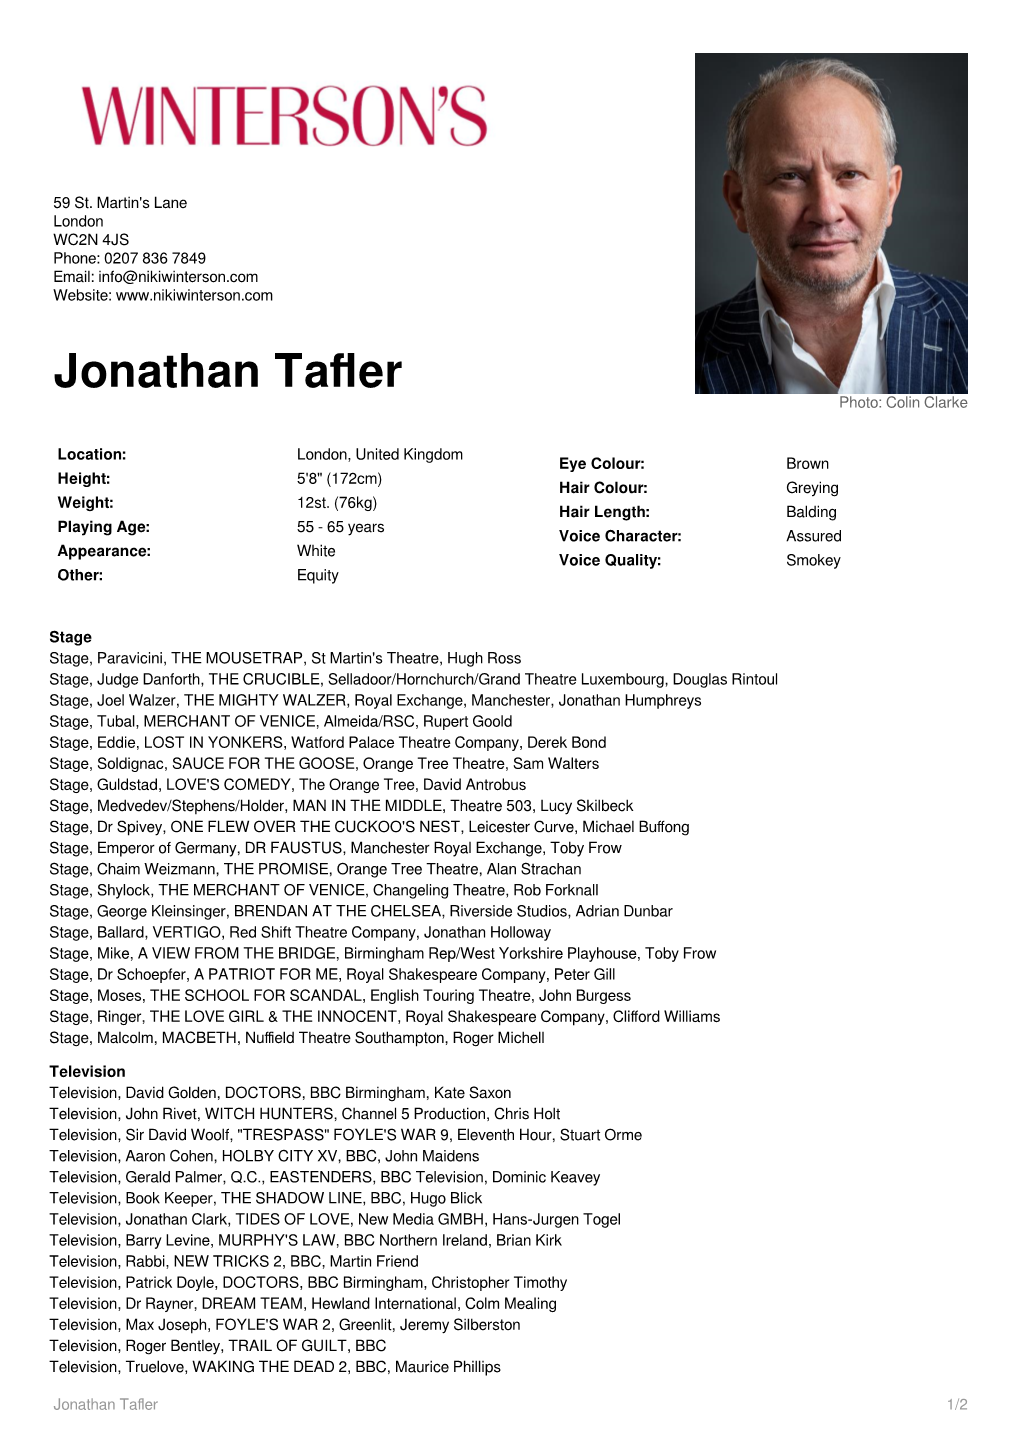 Jonathan Tafler